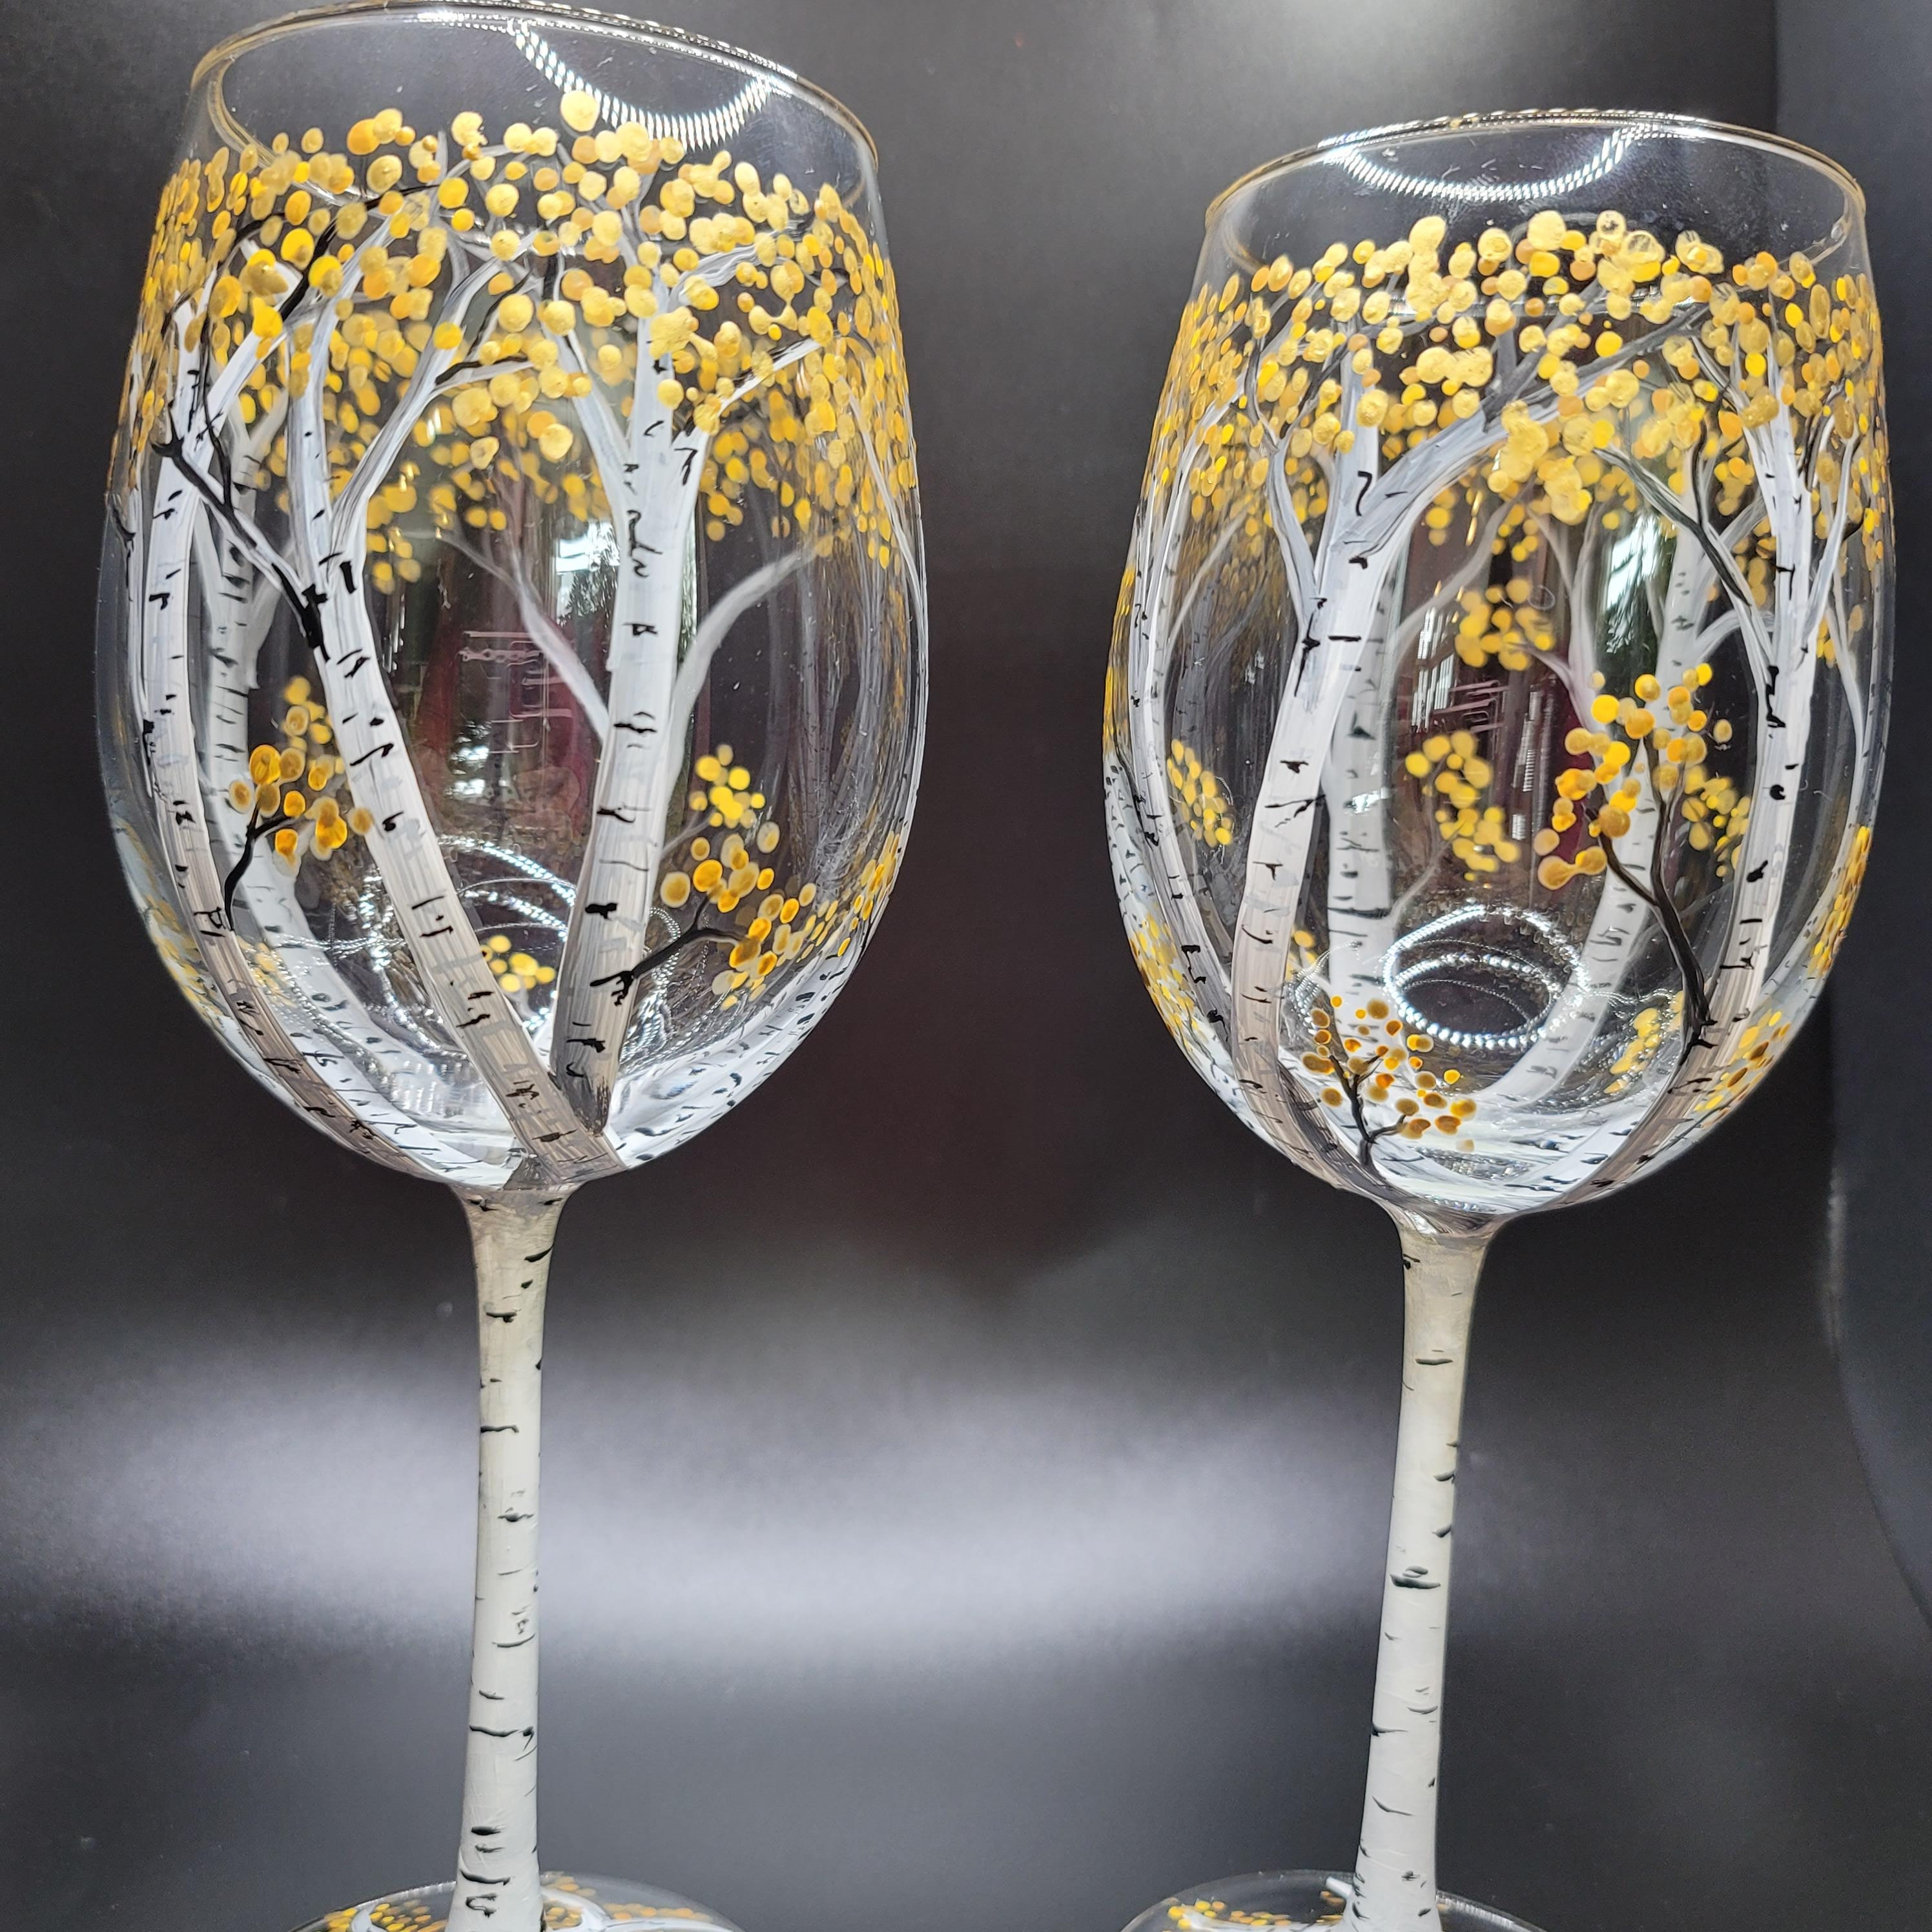 Aspen Champagne Glass Flutes, Set of 8 + Reviews